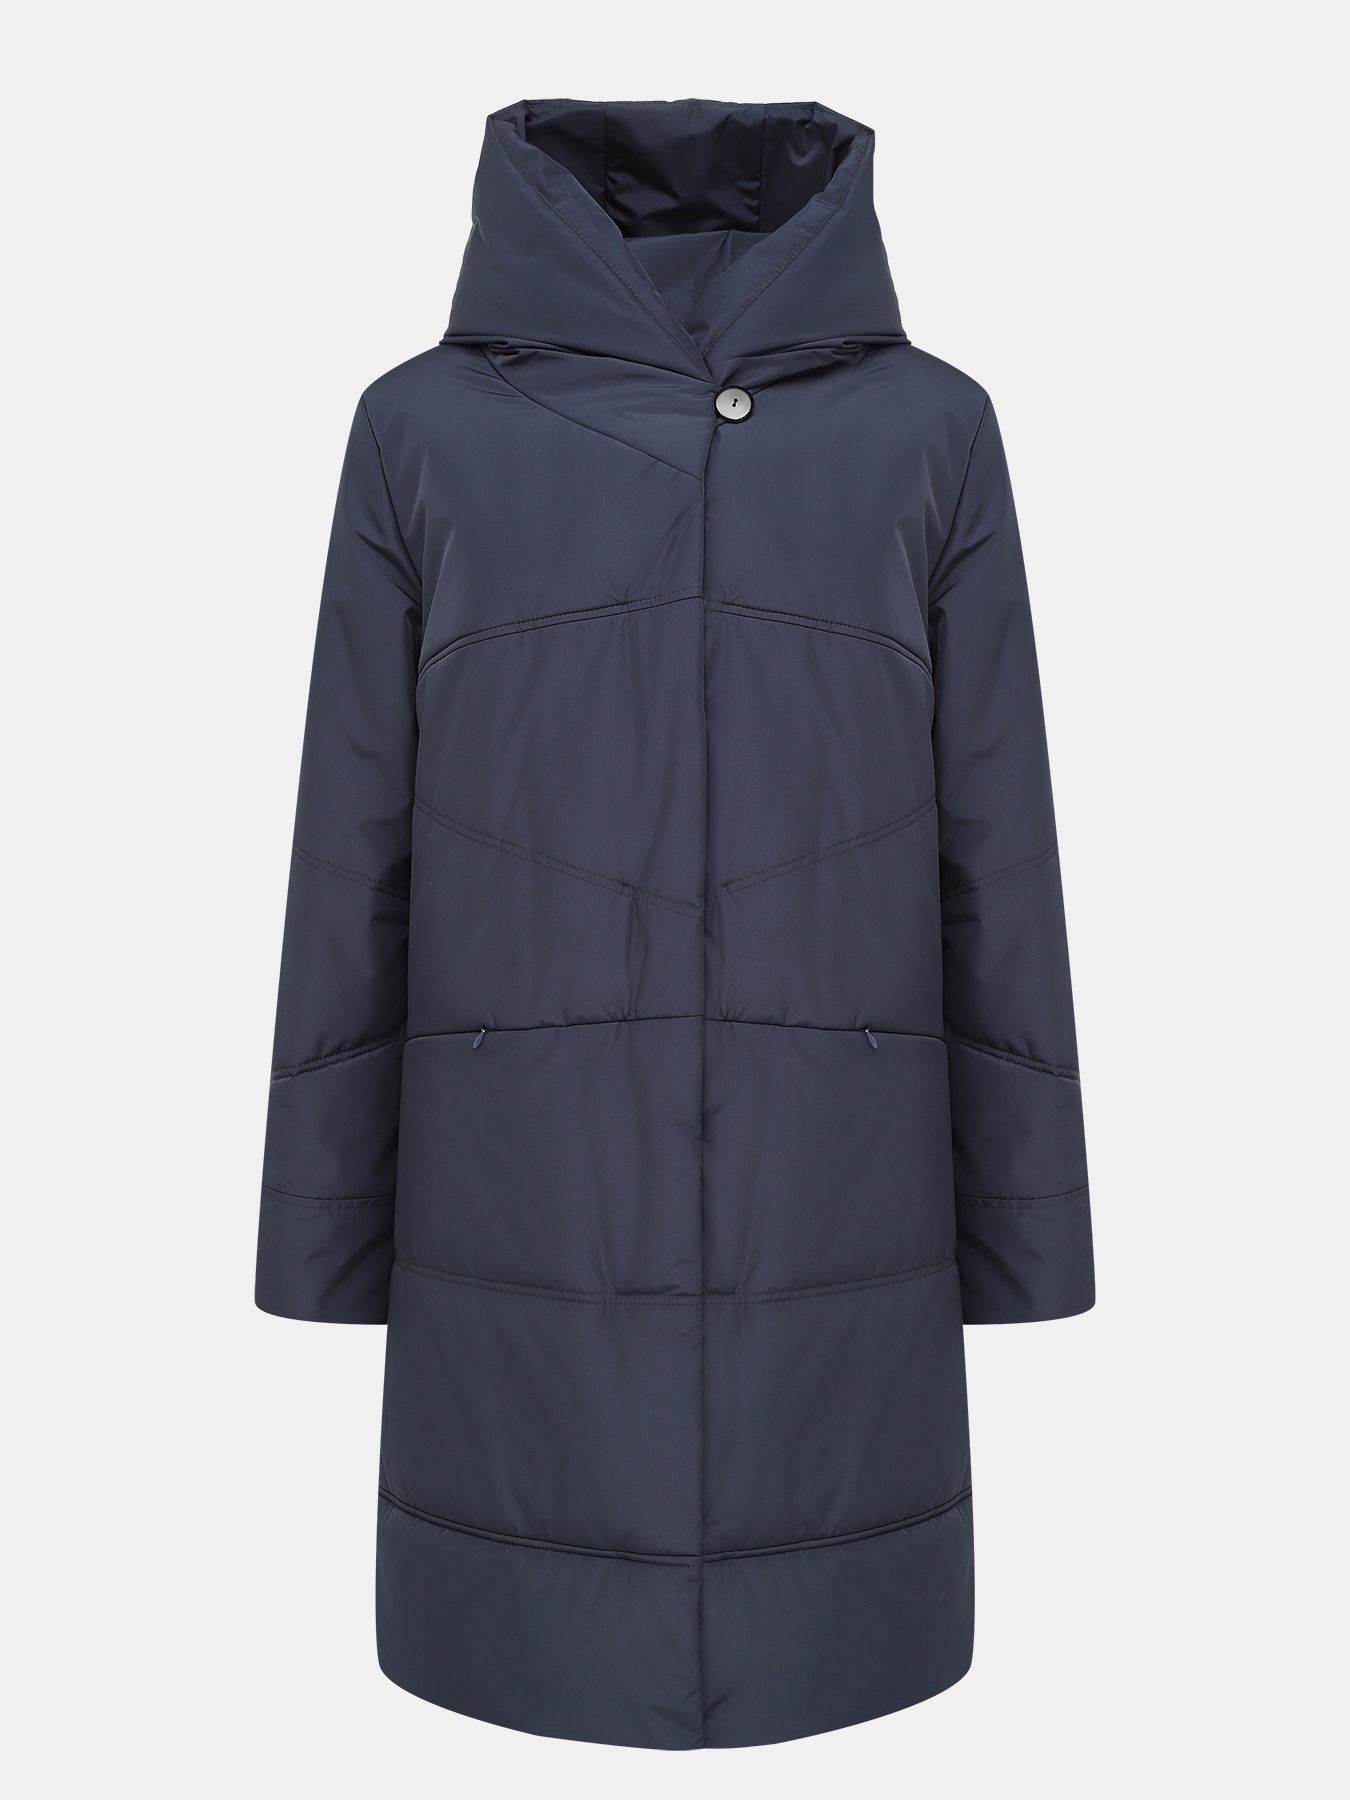 Пальто зимнее Maritta 433616-021, цвет темно-синий, размер 46